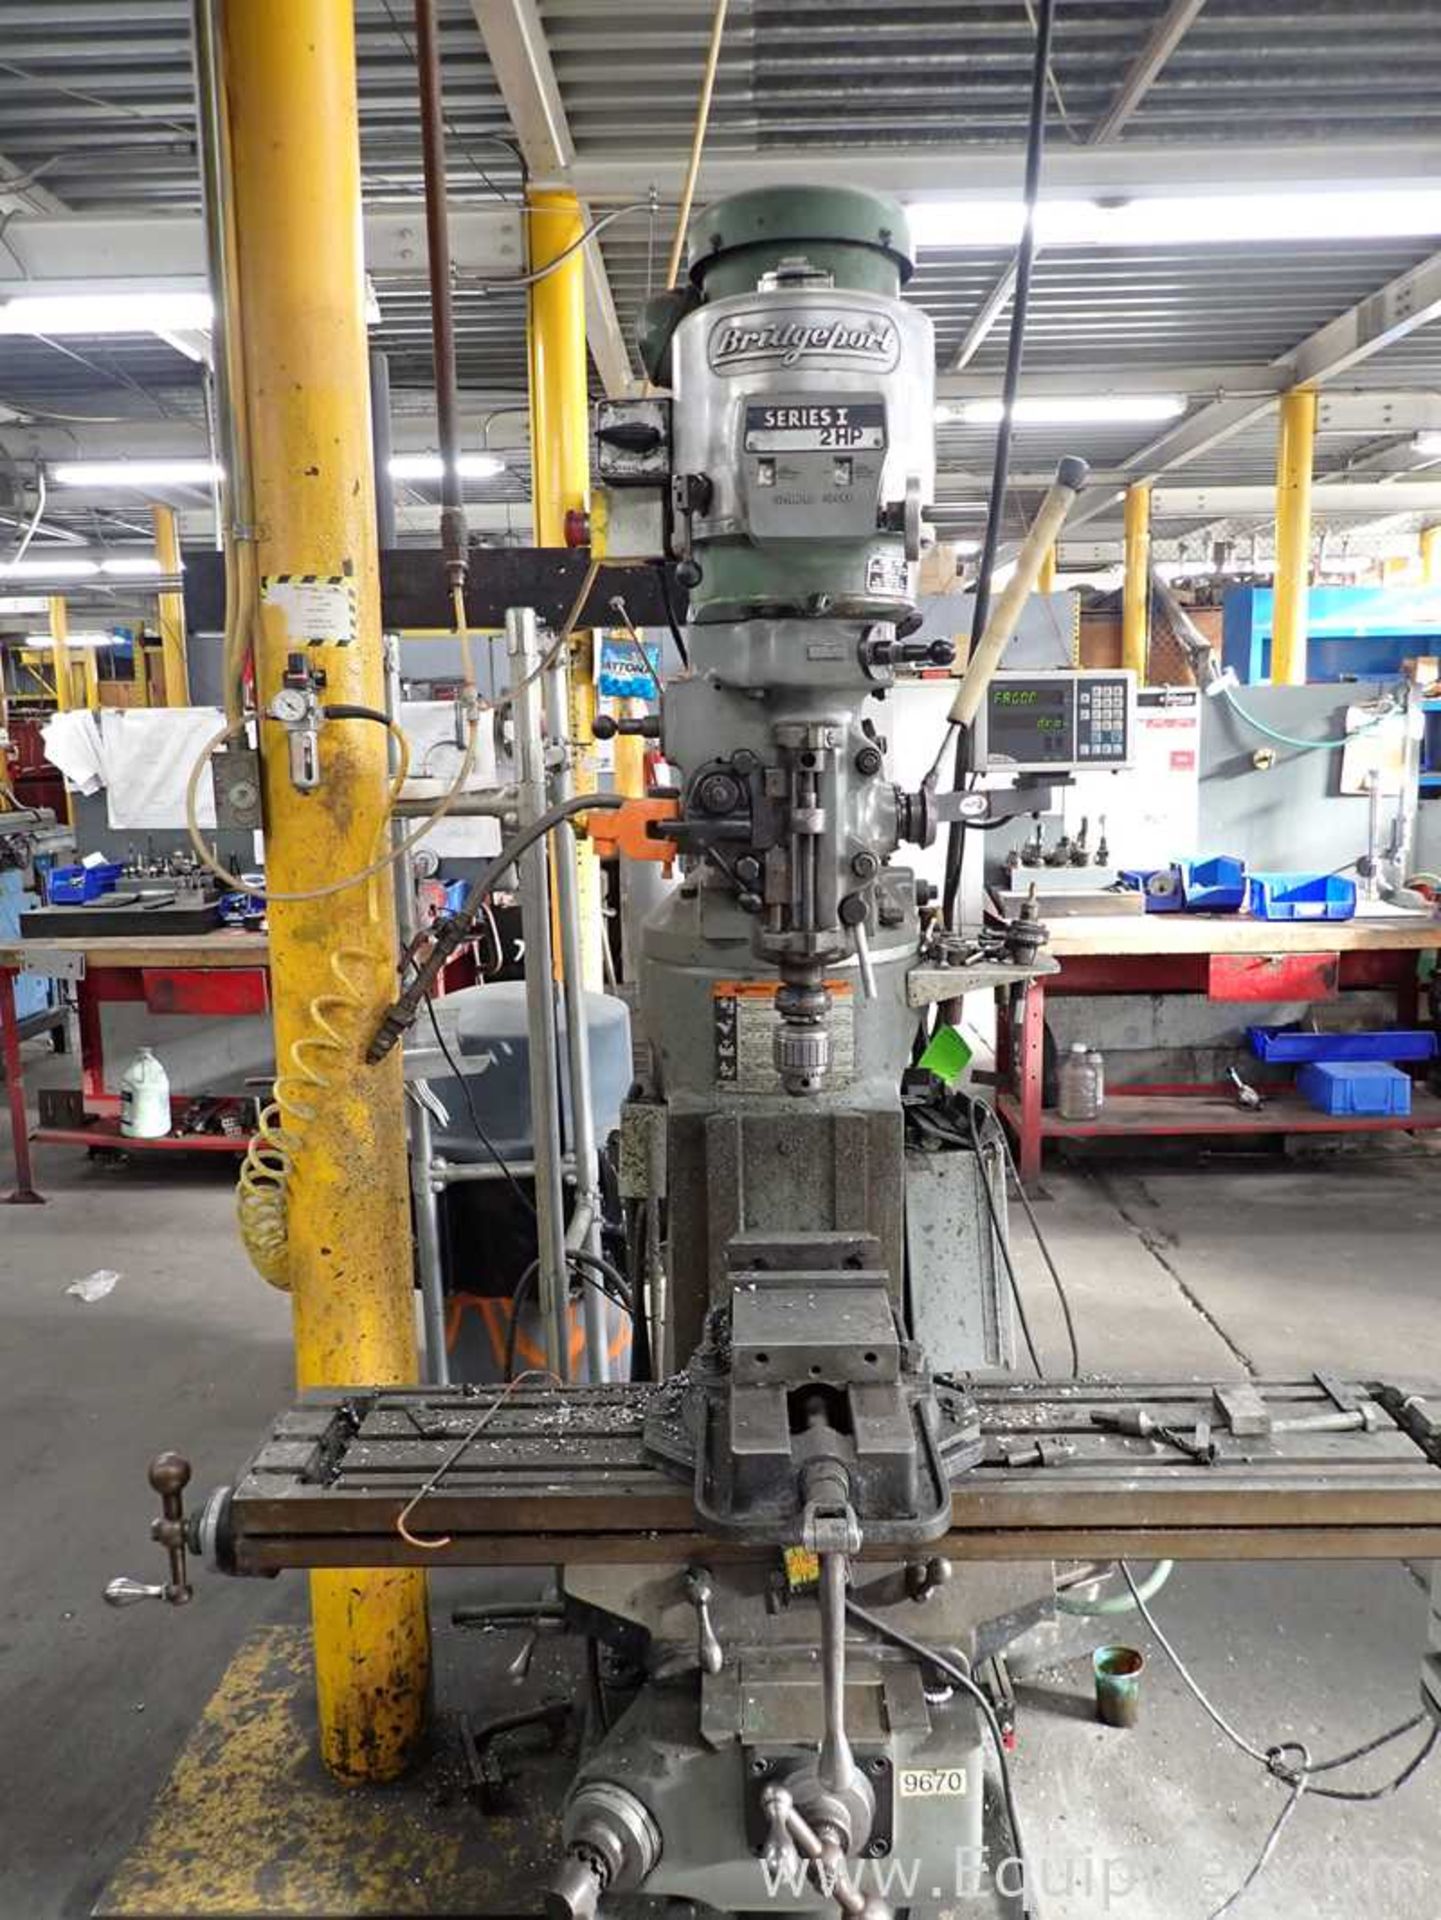 Bridgeport Series 1 CNC Vertical Milling, Drilling and Boring Machine